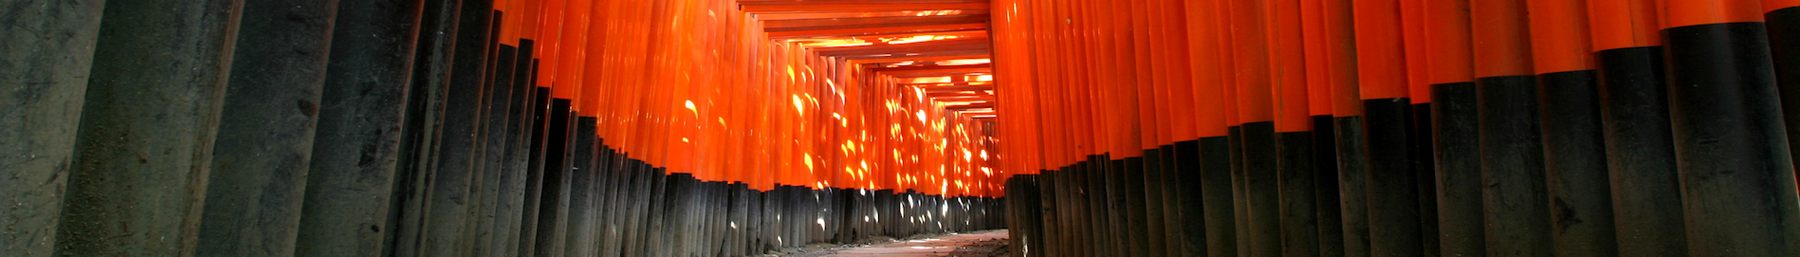 Kyoto banner Fushimi Inari Torii.png